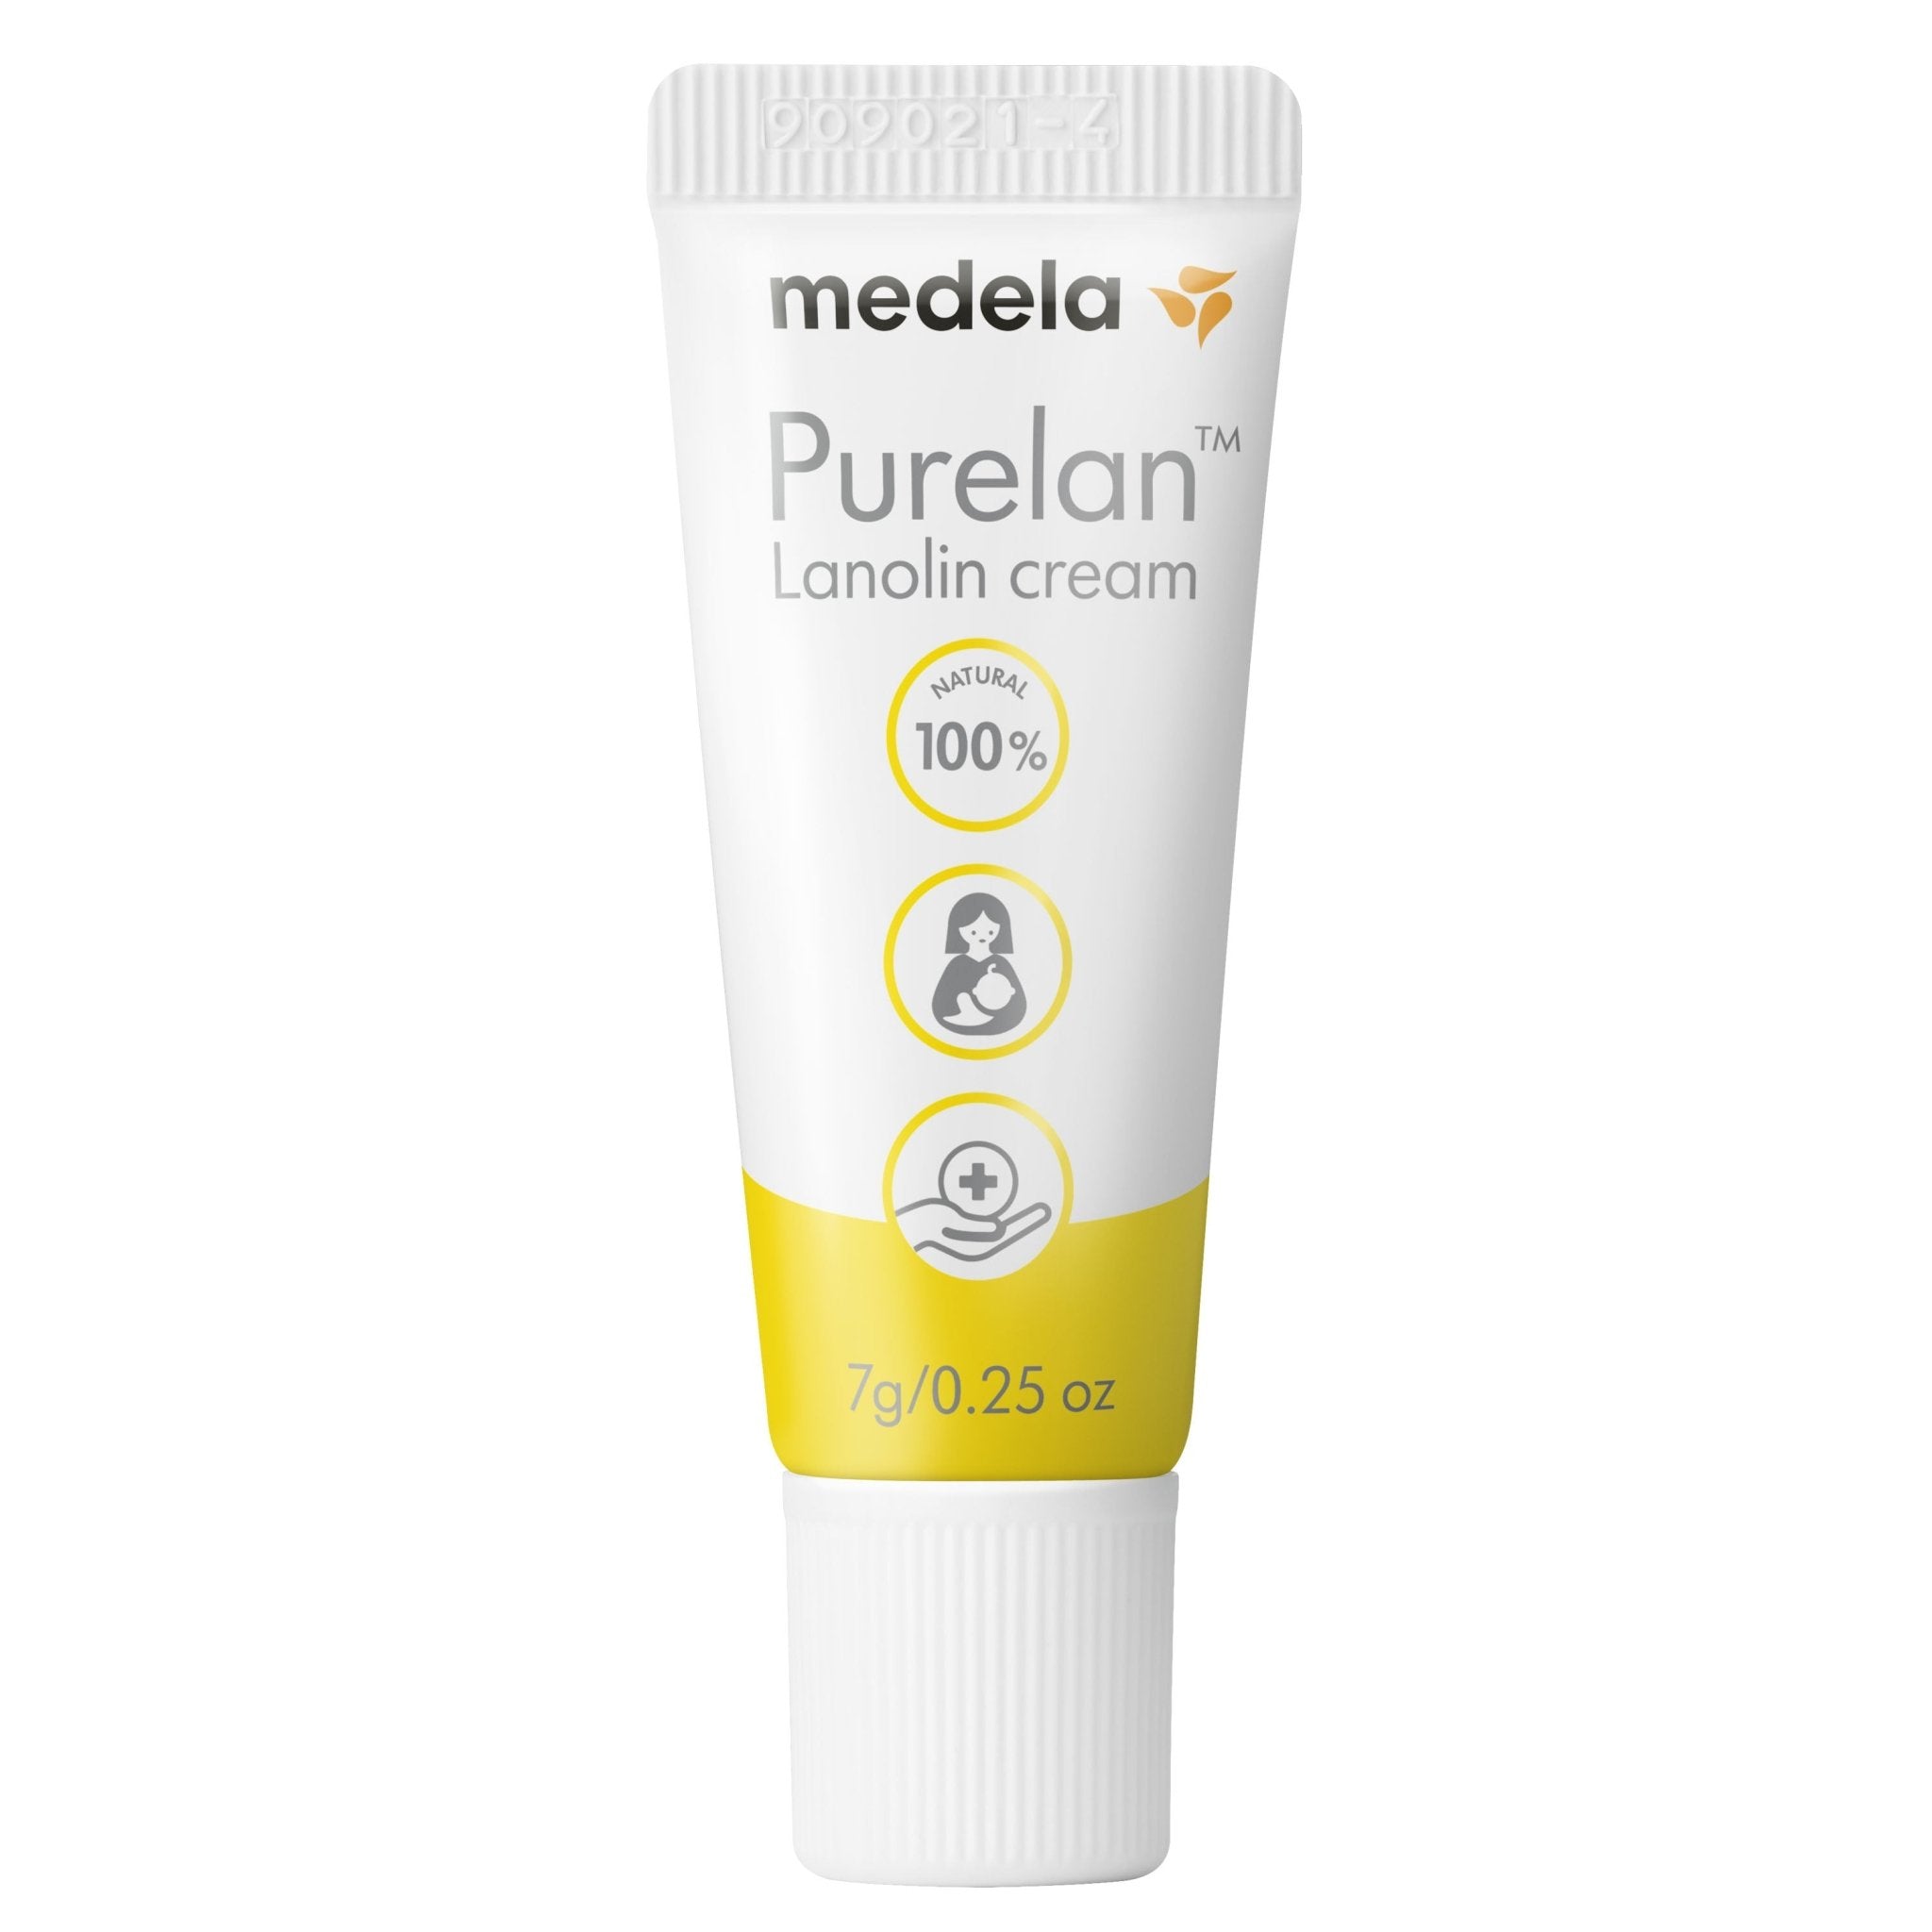 Medela Purelan Lanolin Cream - ANB Baby -100 percent lanolin cream